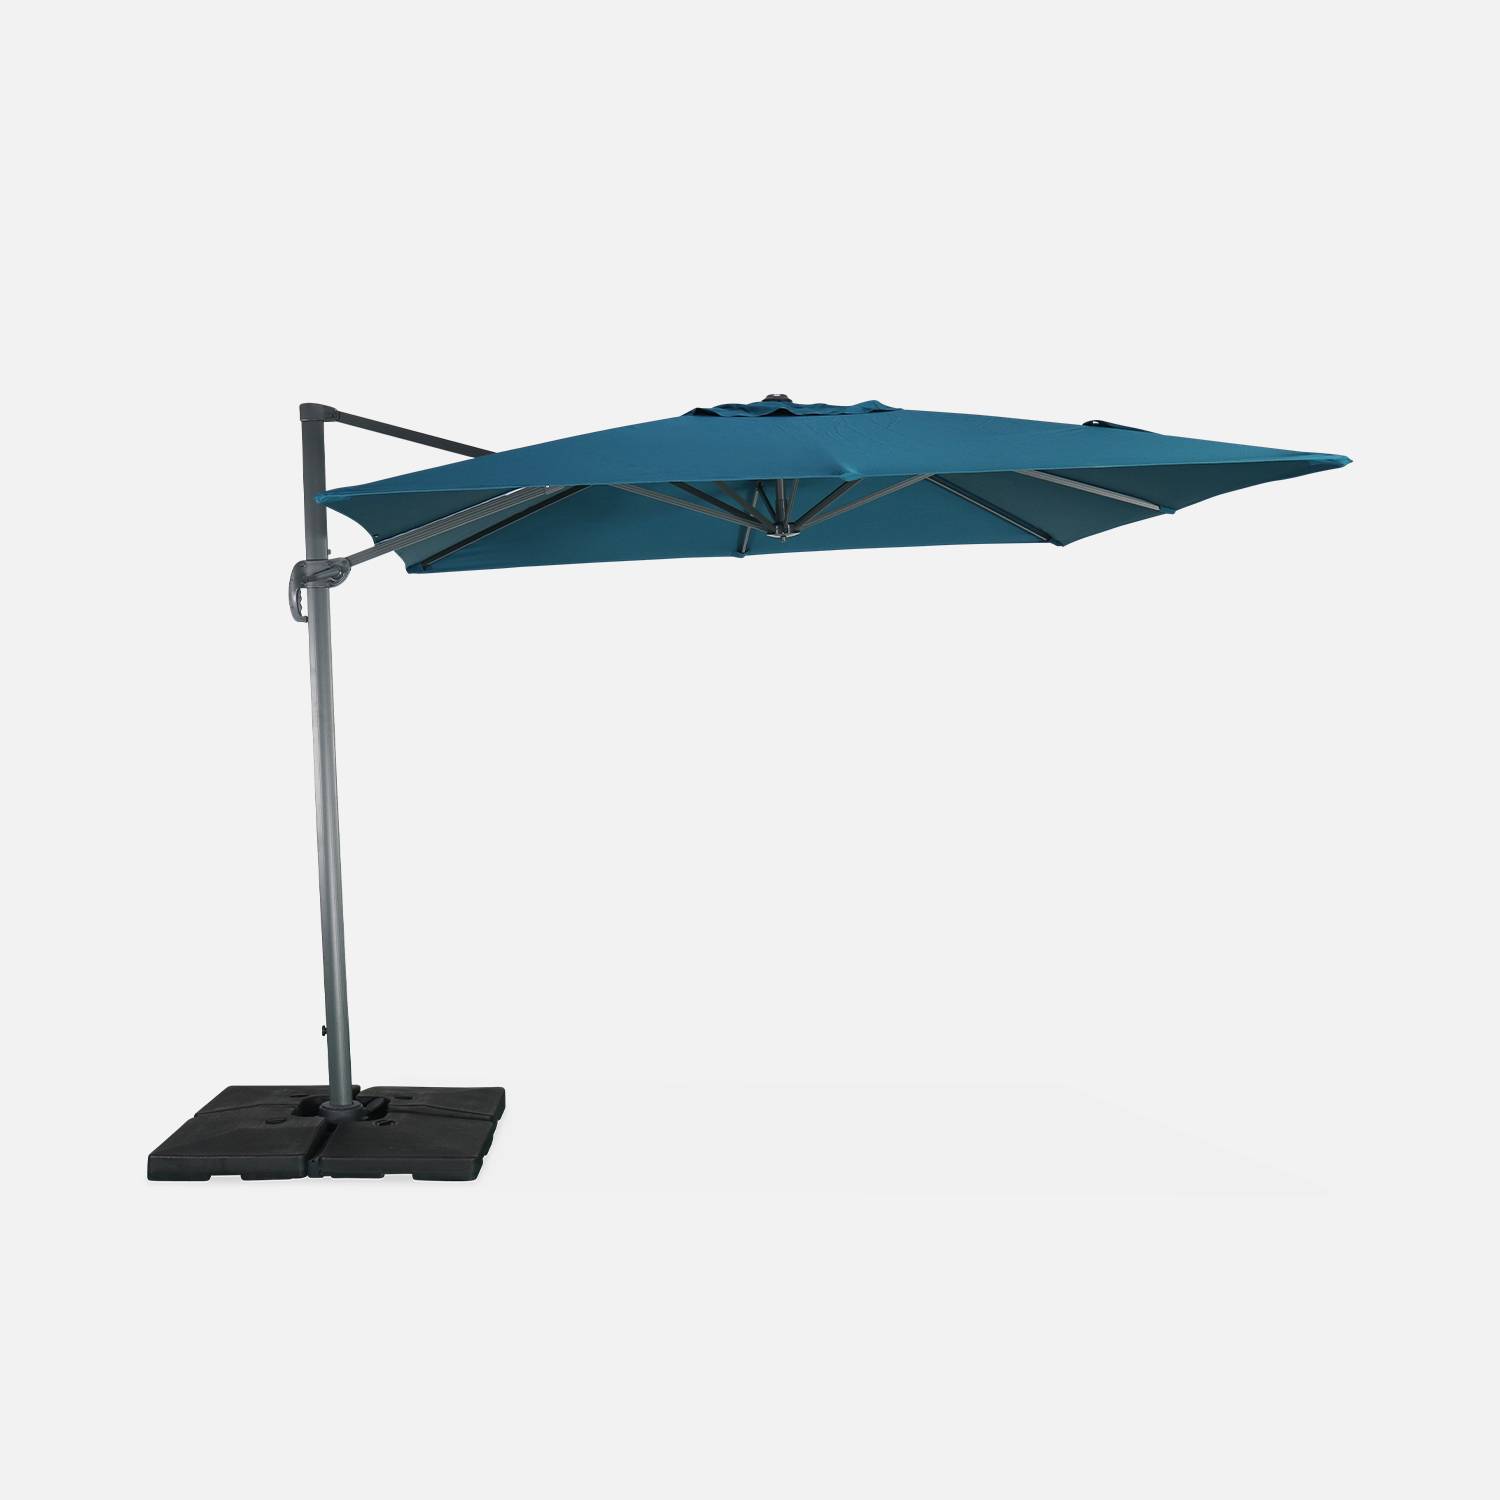 Hoogwaardige 3 x 3m vierkante parasol- Falgos - Eendblauw - Kantelbare, opvouwbare en 360° draaibare zweefparasol. Photo6